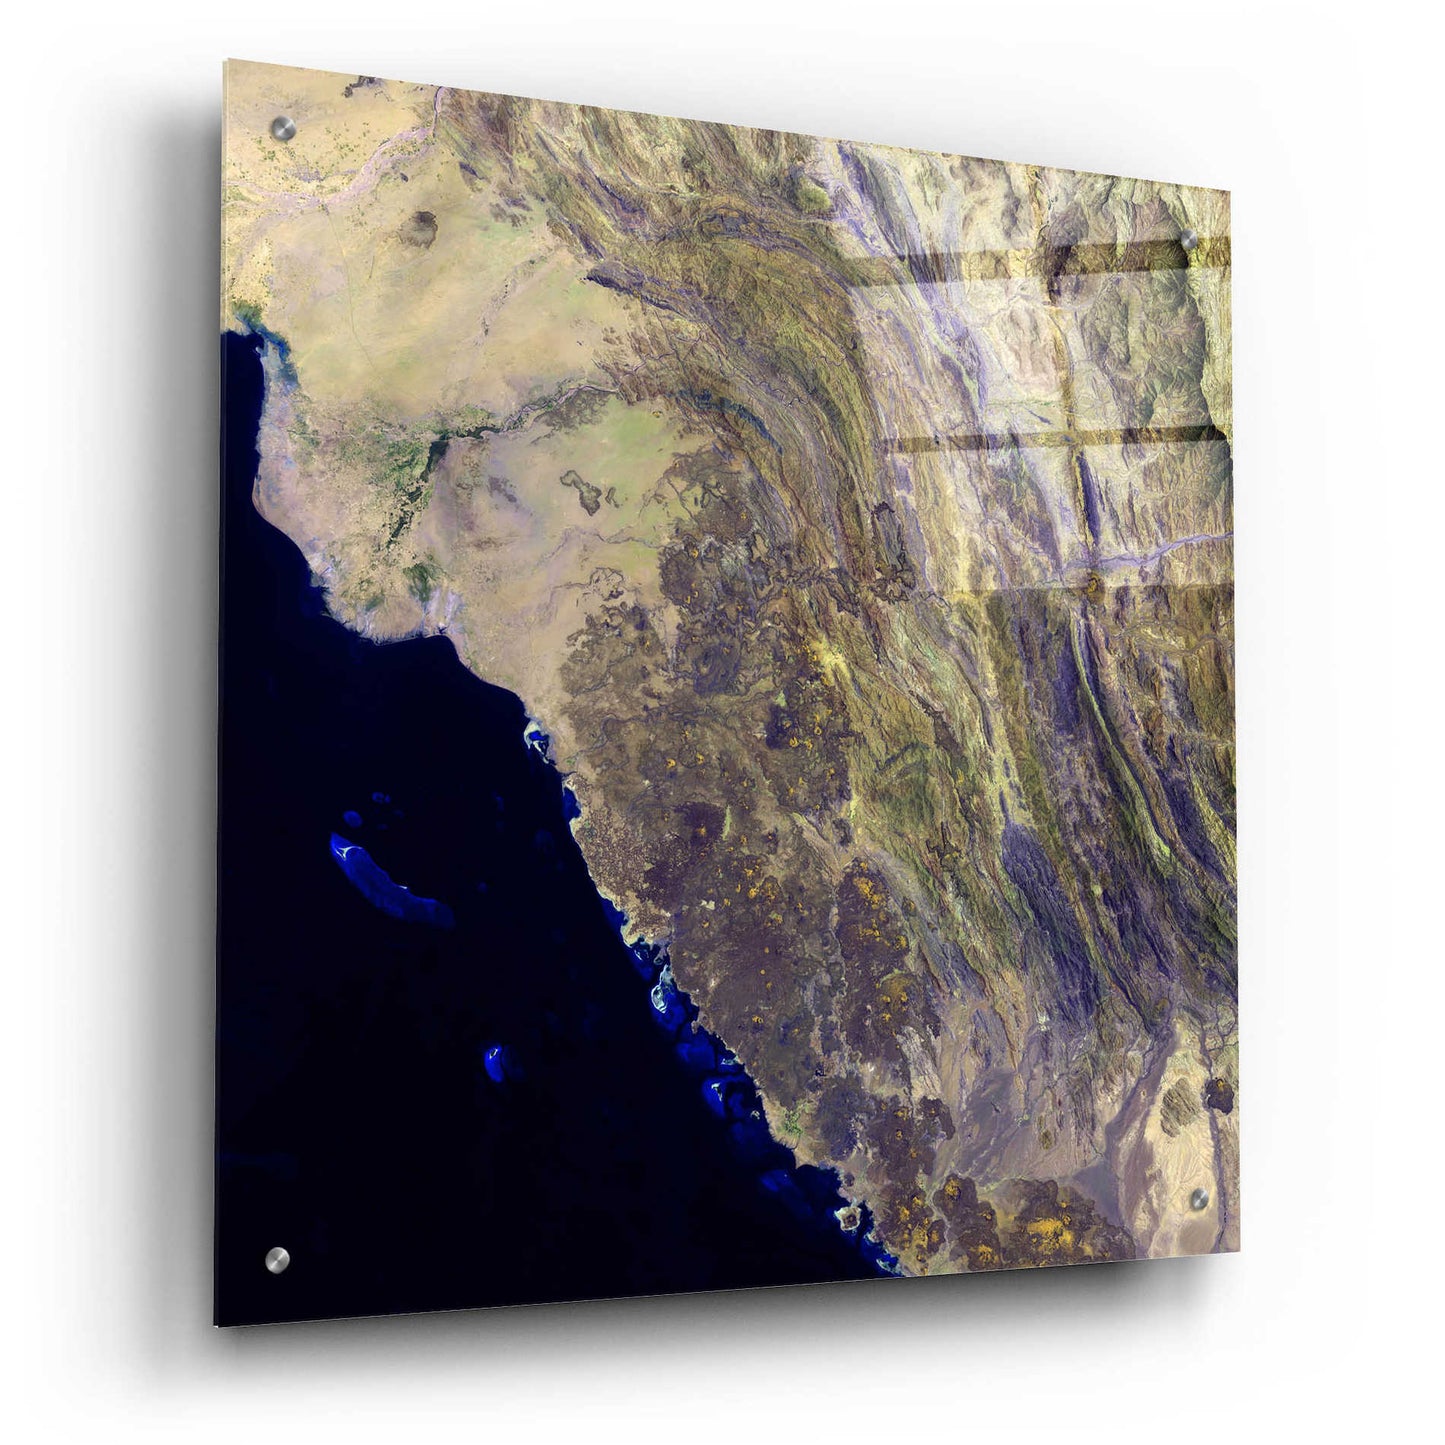 Epic Art 'Earth as Art: Harrat Al Birk' Acrylic Glass Wall Art,24x24